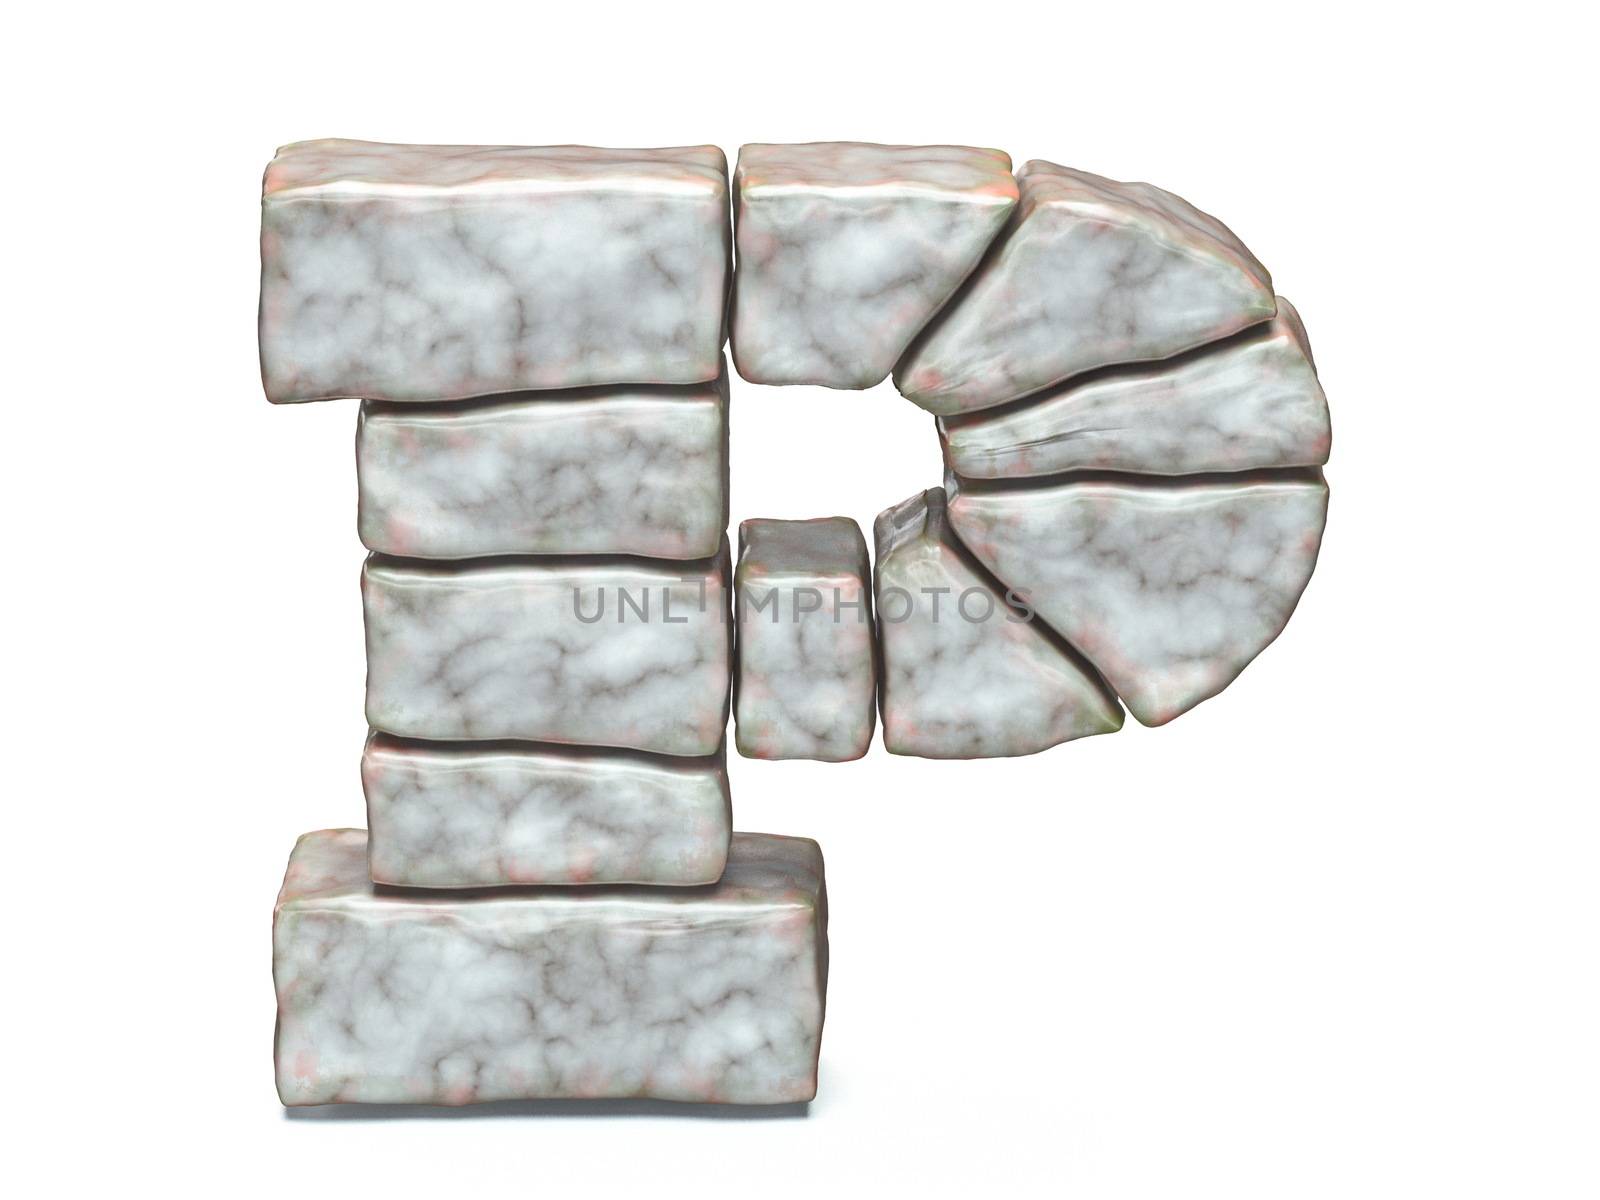 Rock masonry font letter P 3D render illustration isolated on white background